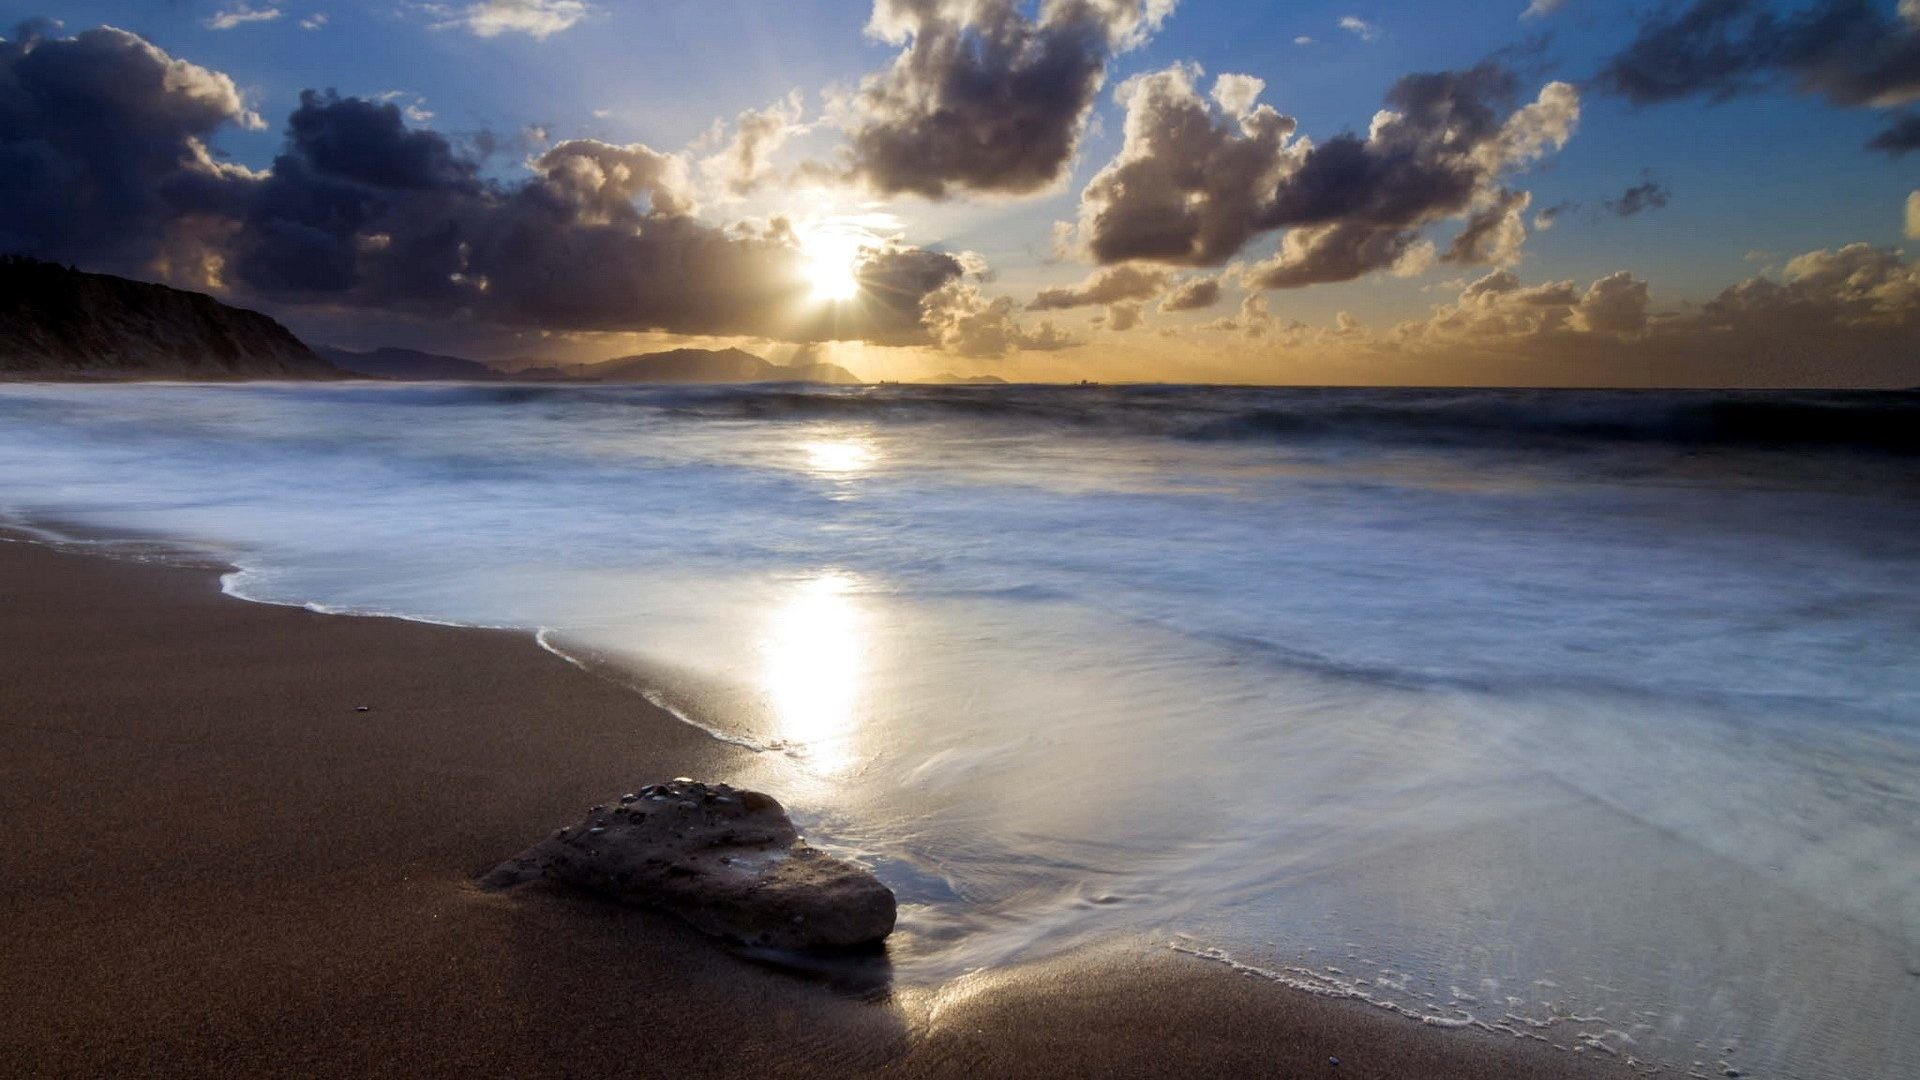 1920x1080 Beaches - Nature Sunset Splendor View Rays Sand Ocean Reflection Sun  Beautiful Peaceful Waves Clouds Beauty